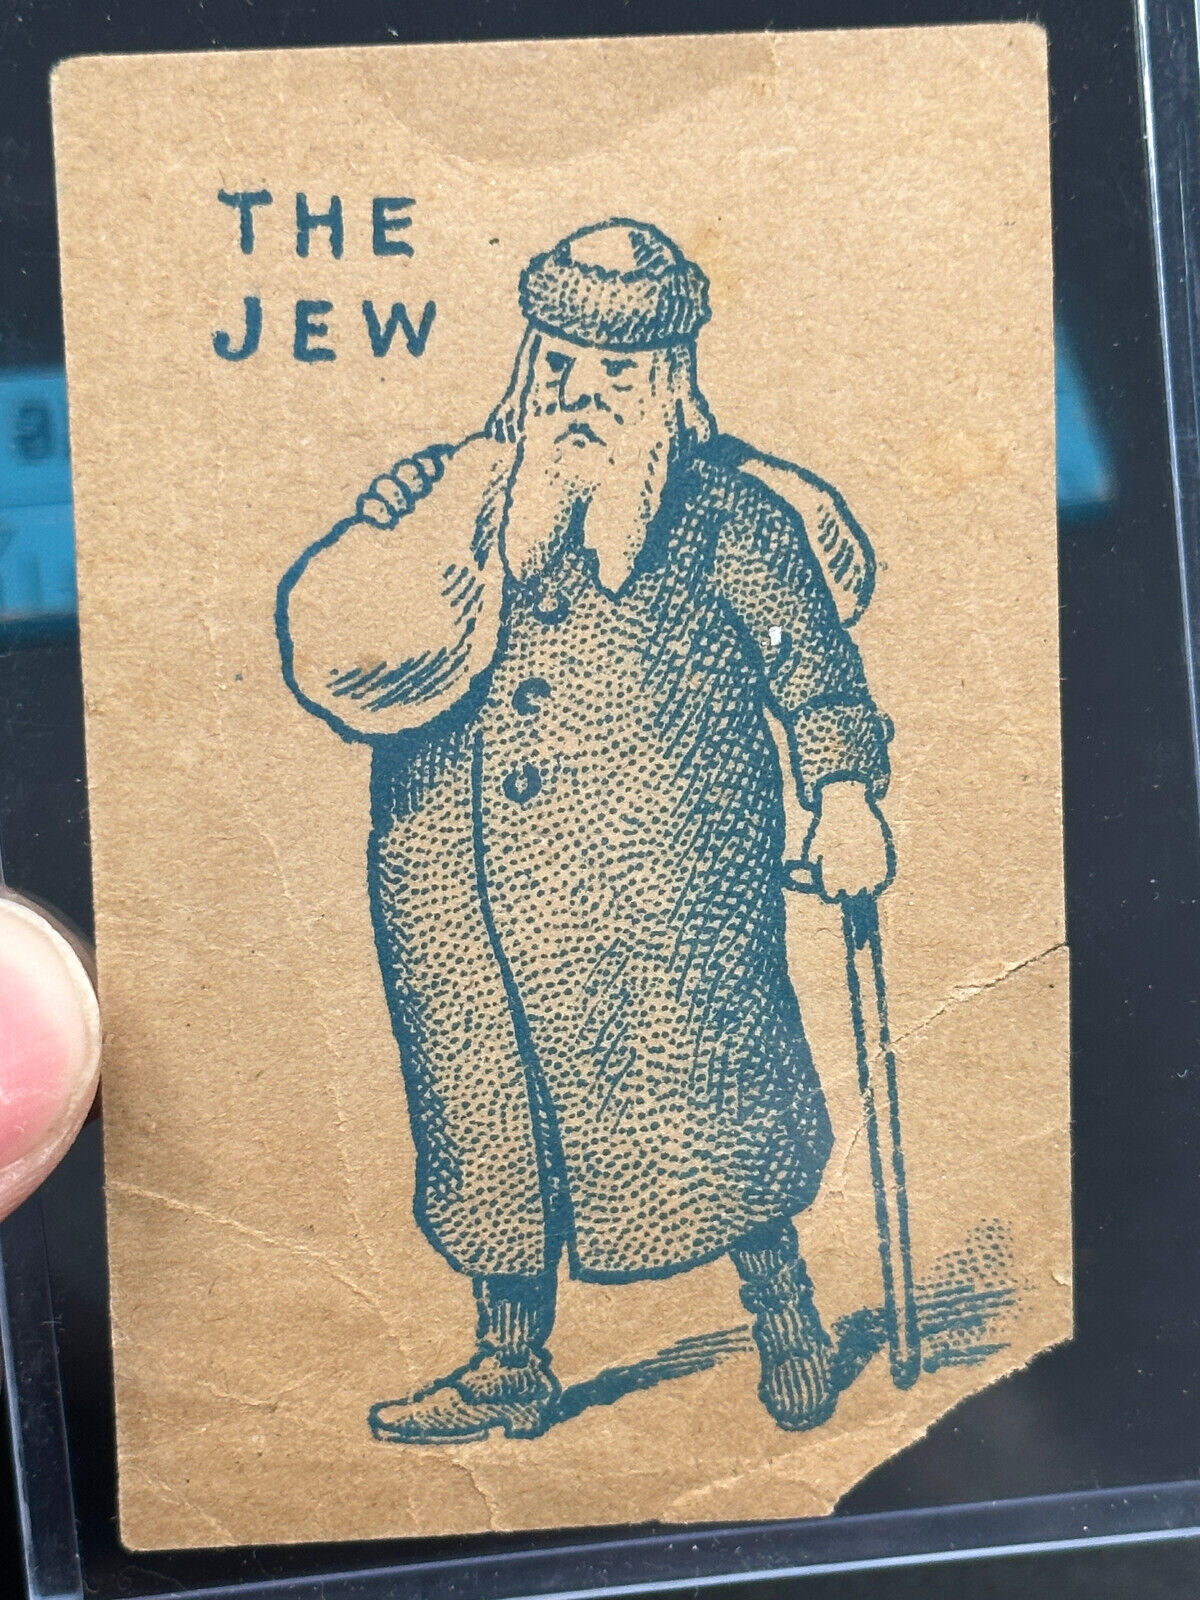 VERY RARE 1910's Jewish Man Trade Card cartoon illustration